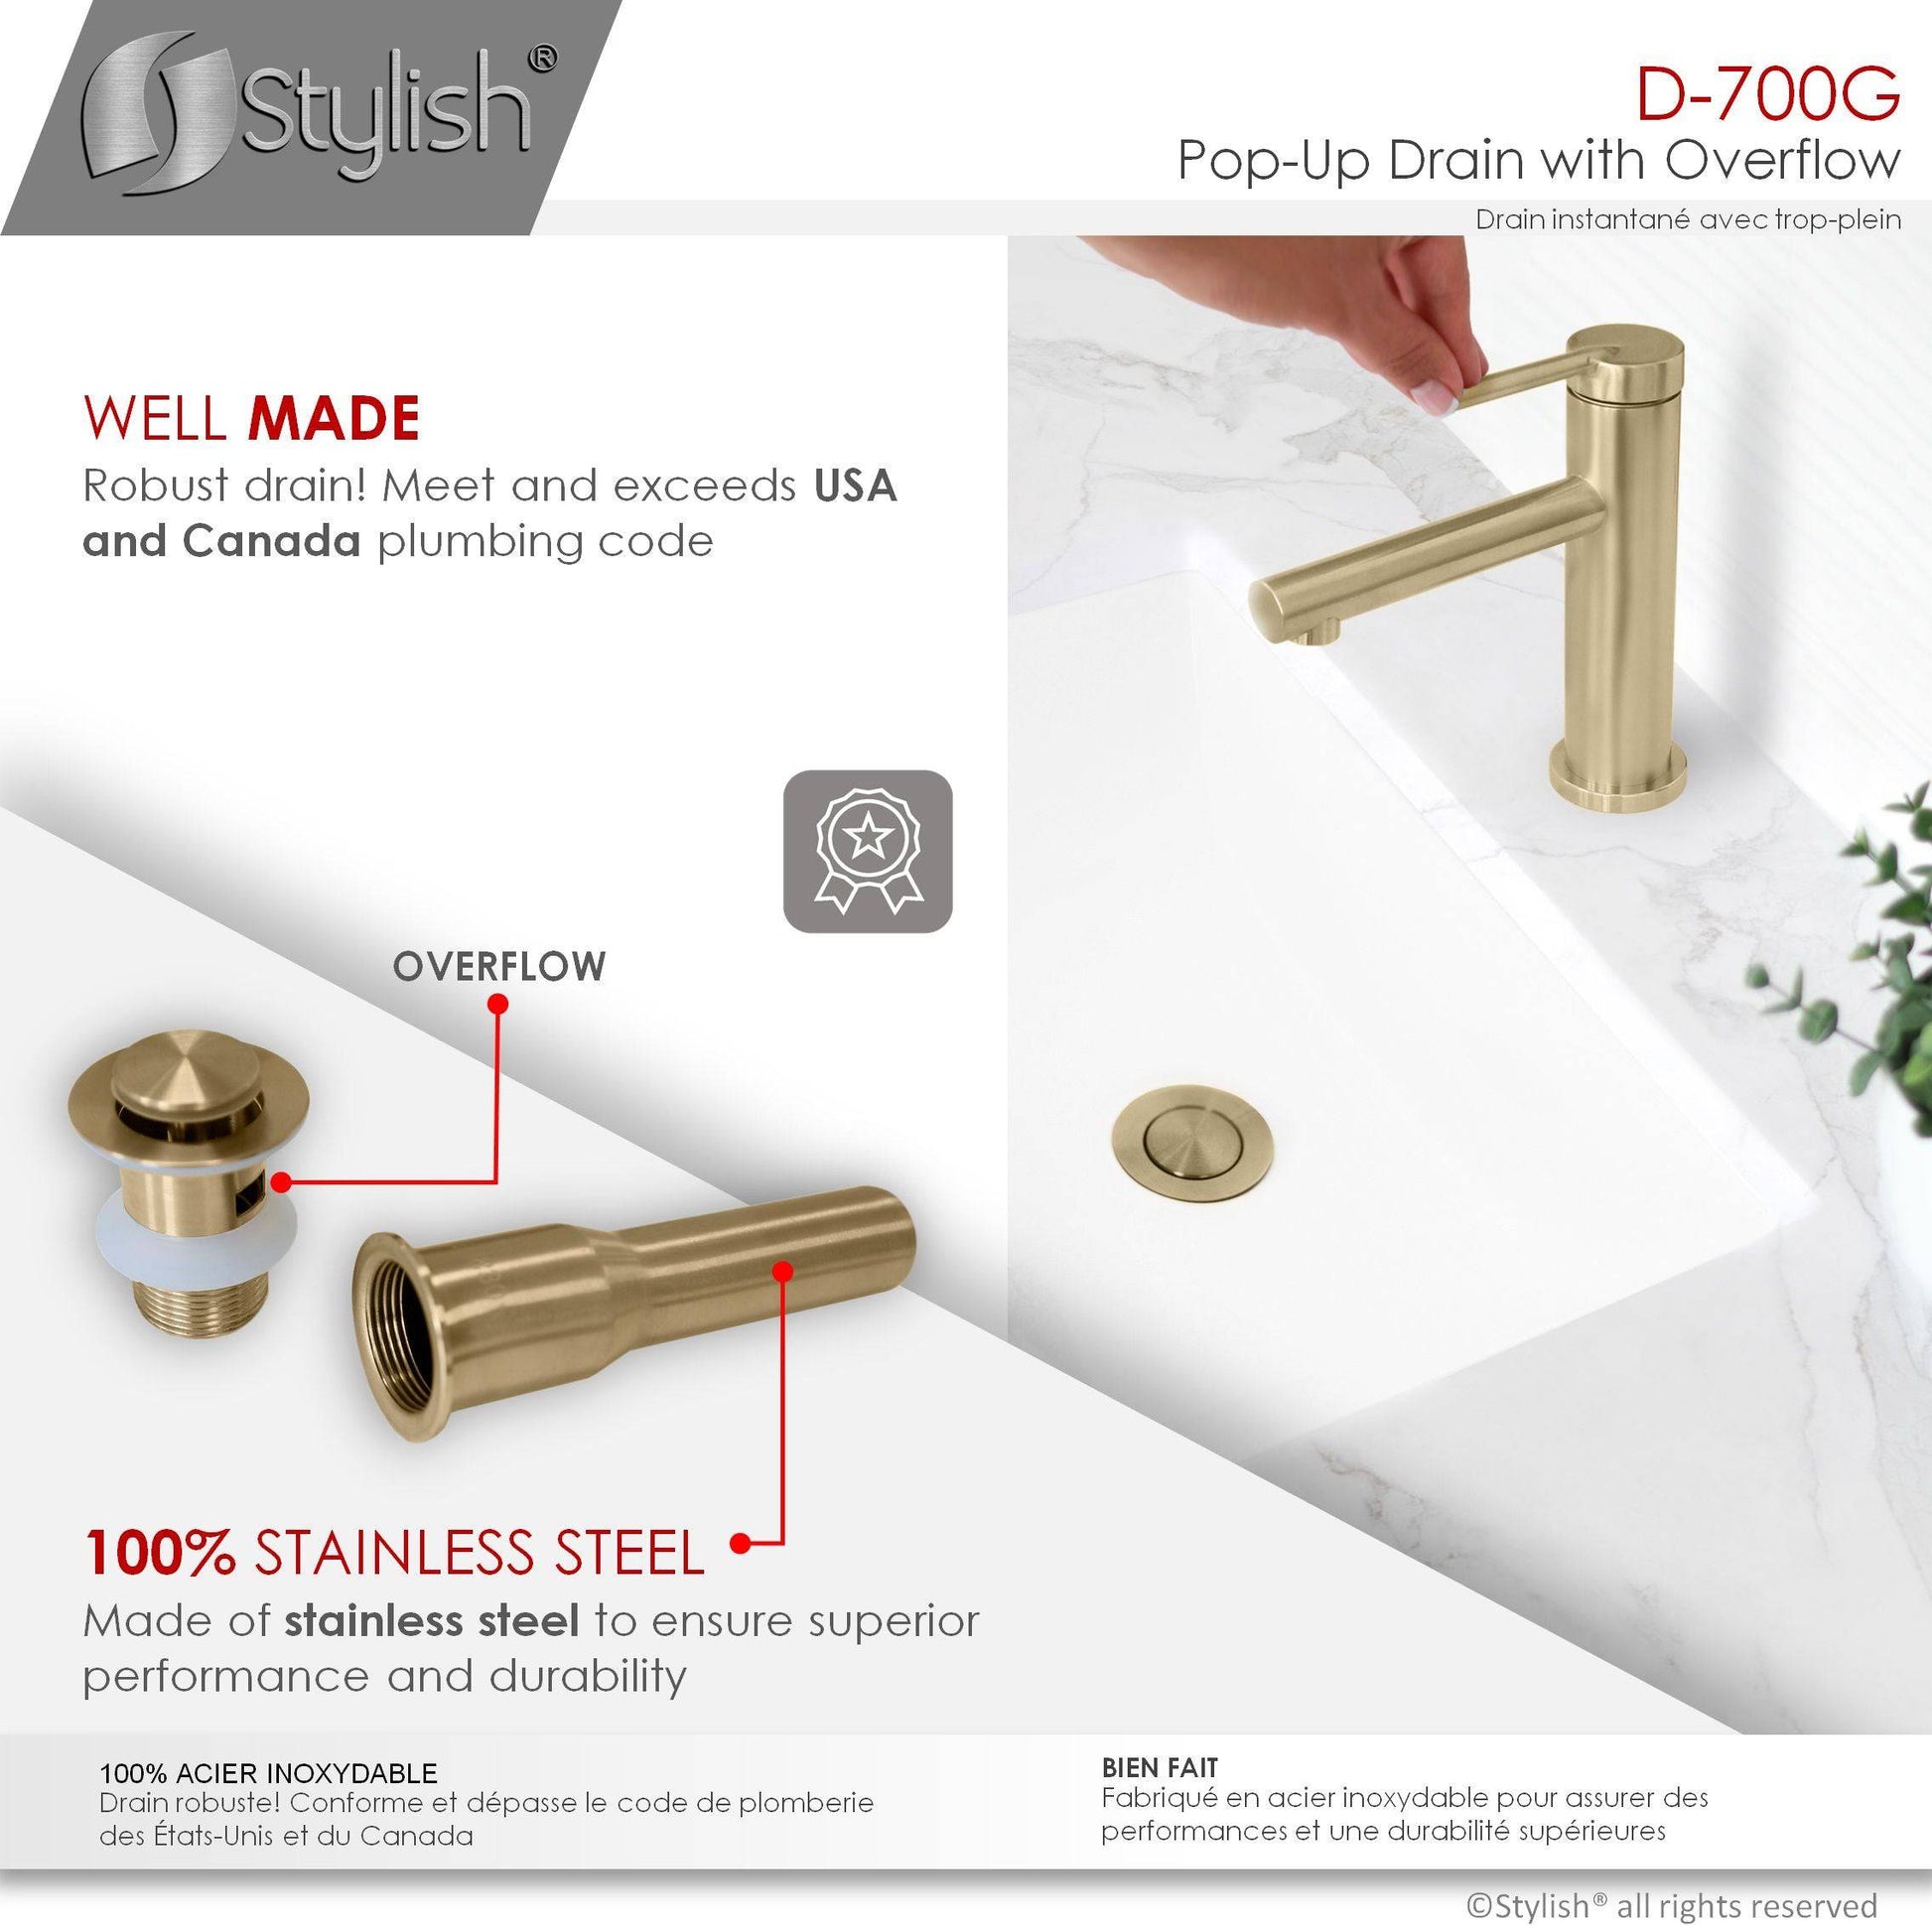 Stylish Stainless Steel Bathroom Sink Pop-Up Drain with Overflow D-700G - Renoz